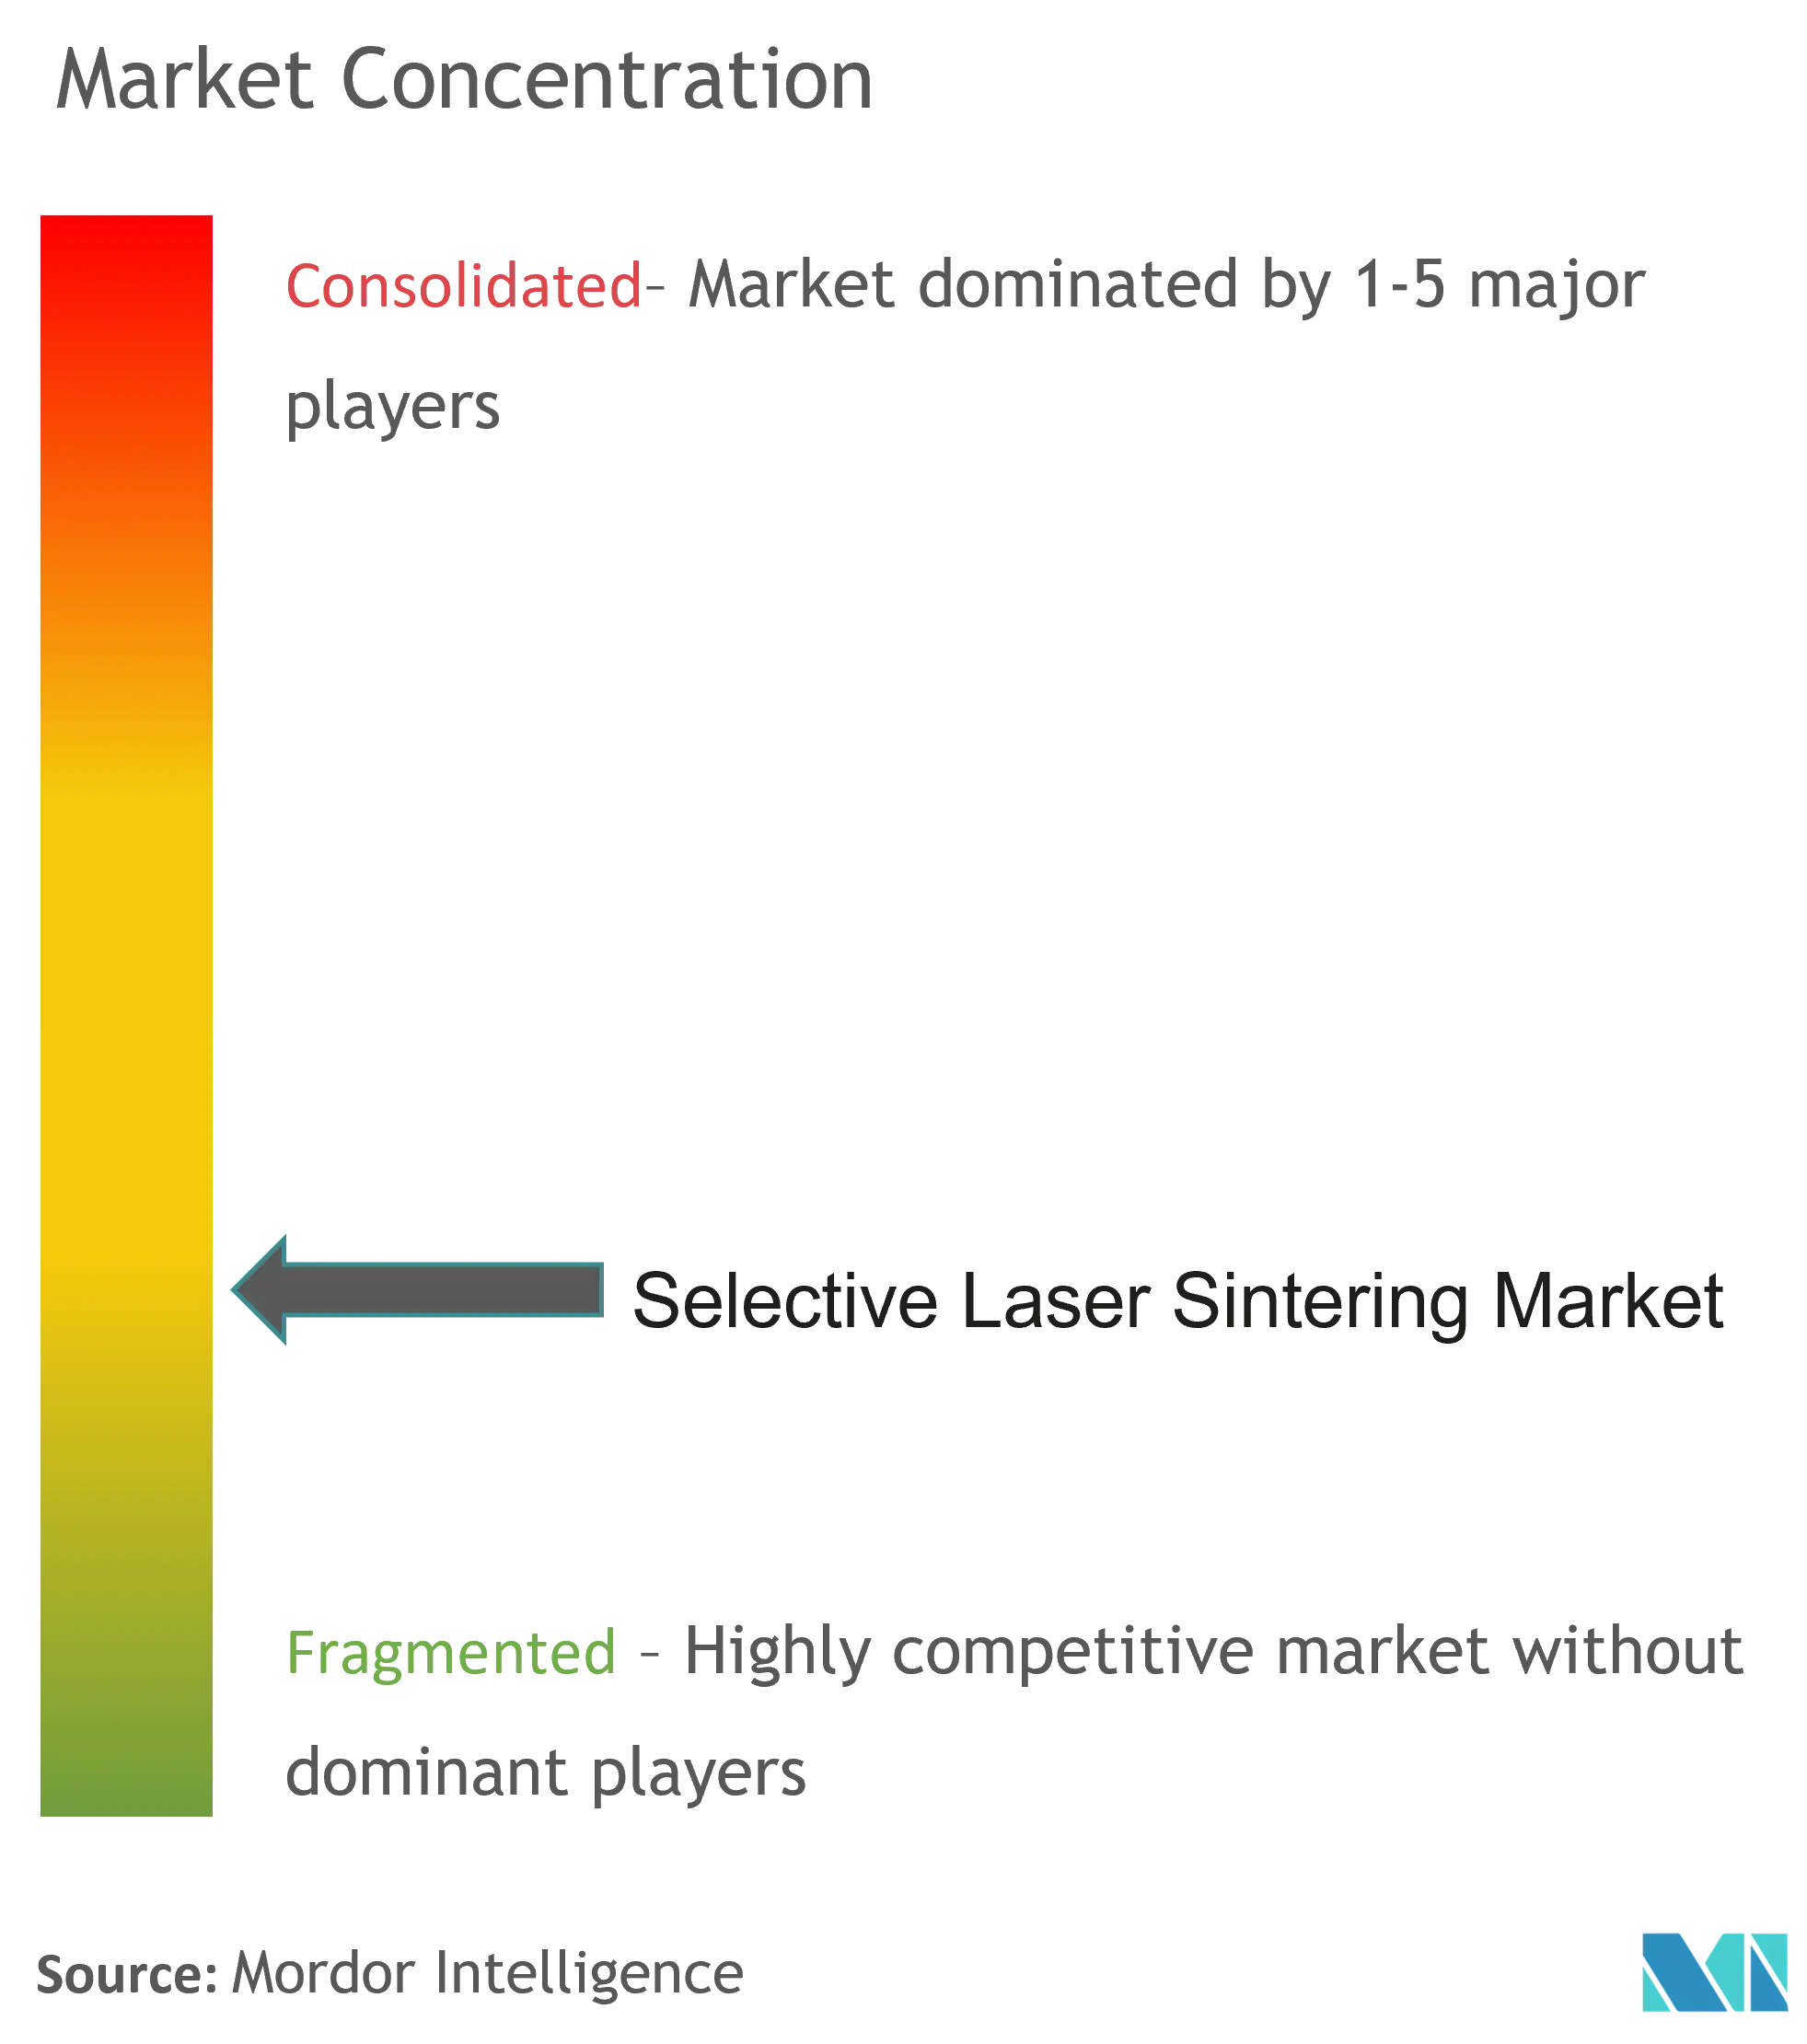 Mercado de sinterización selectiva por láser - Market Concentration.png